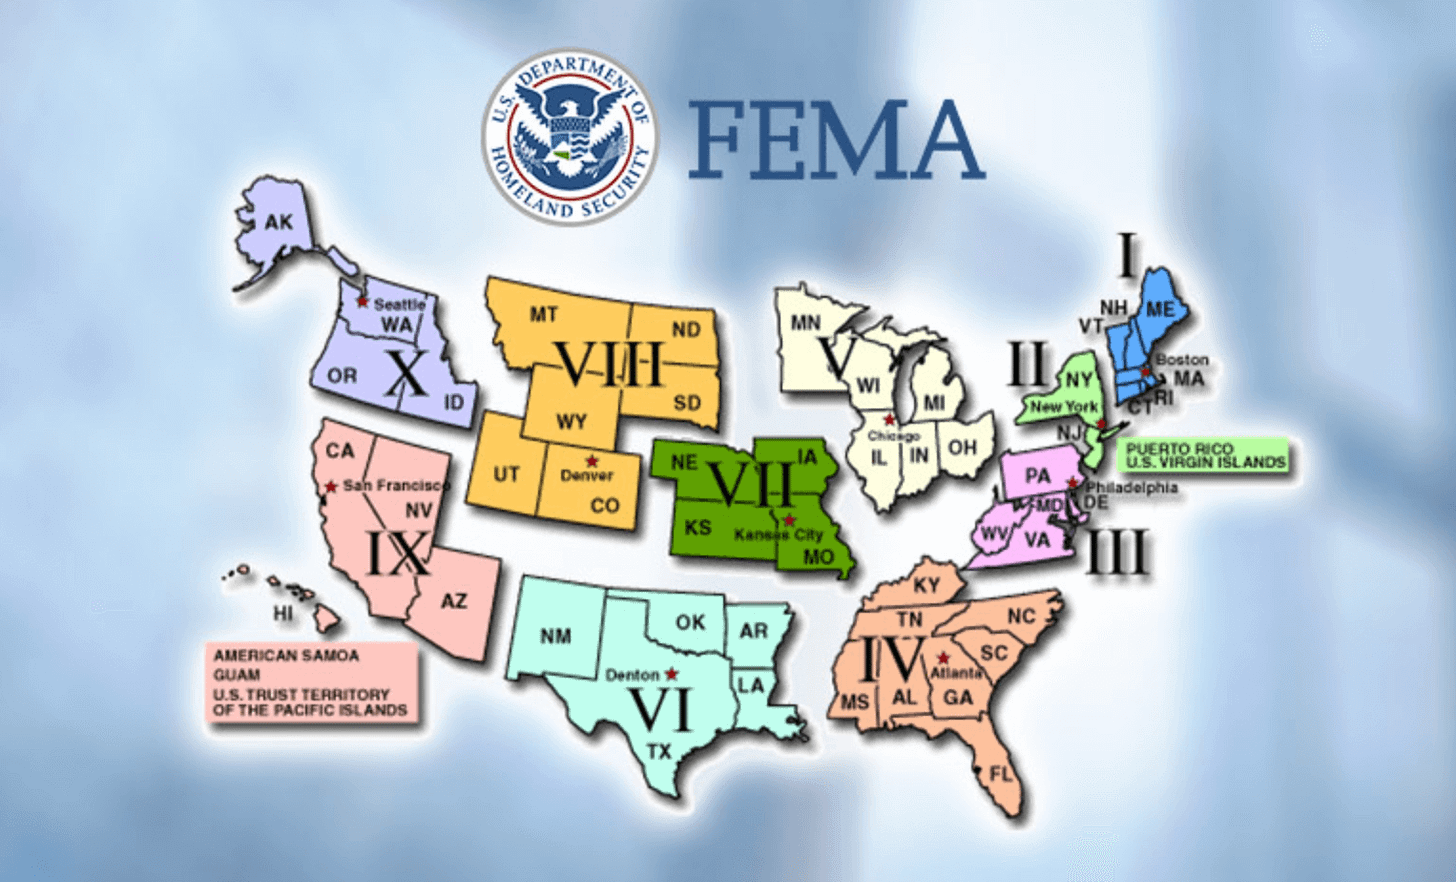 FEMA Regions